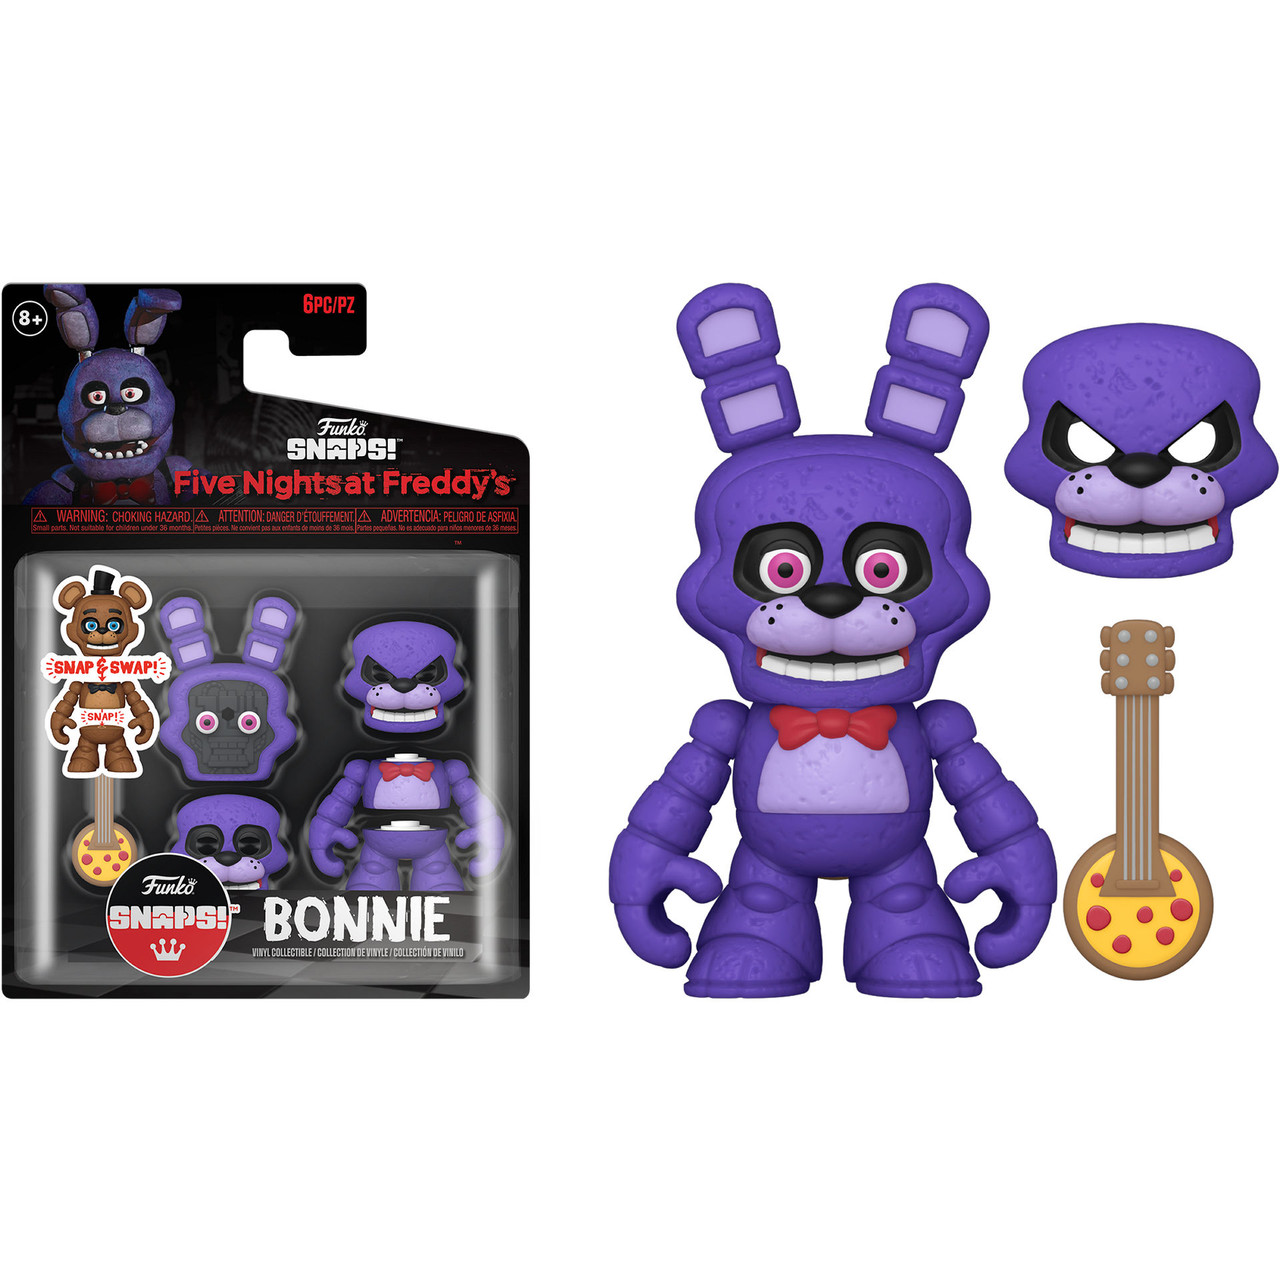 SNAPS! Nightmare Bonnie